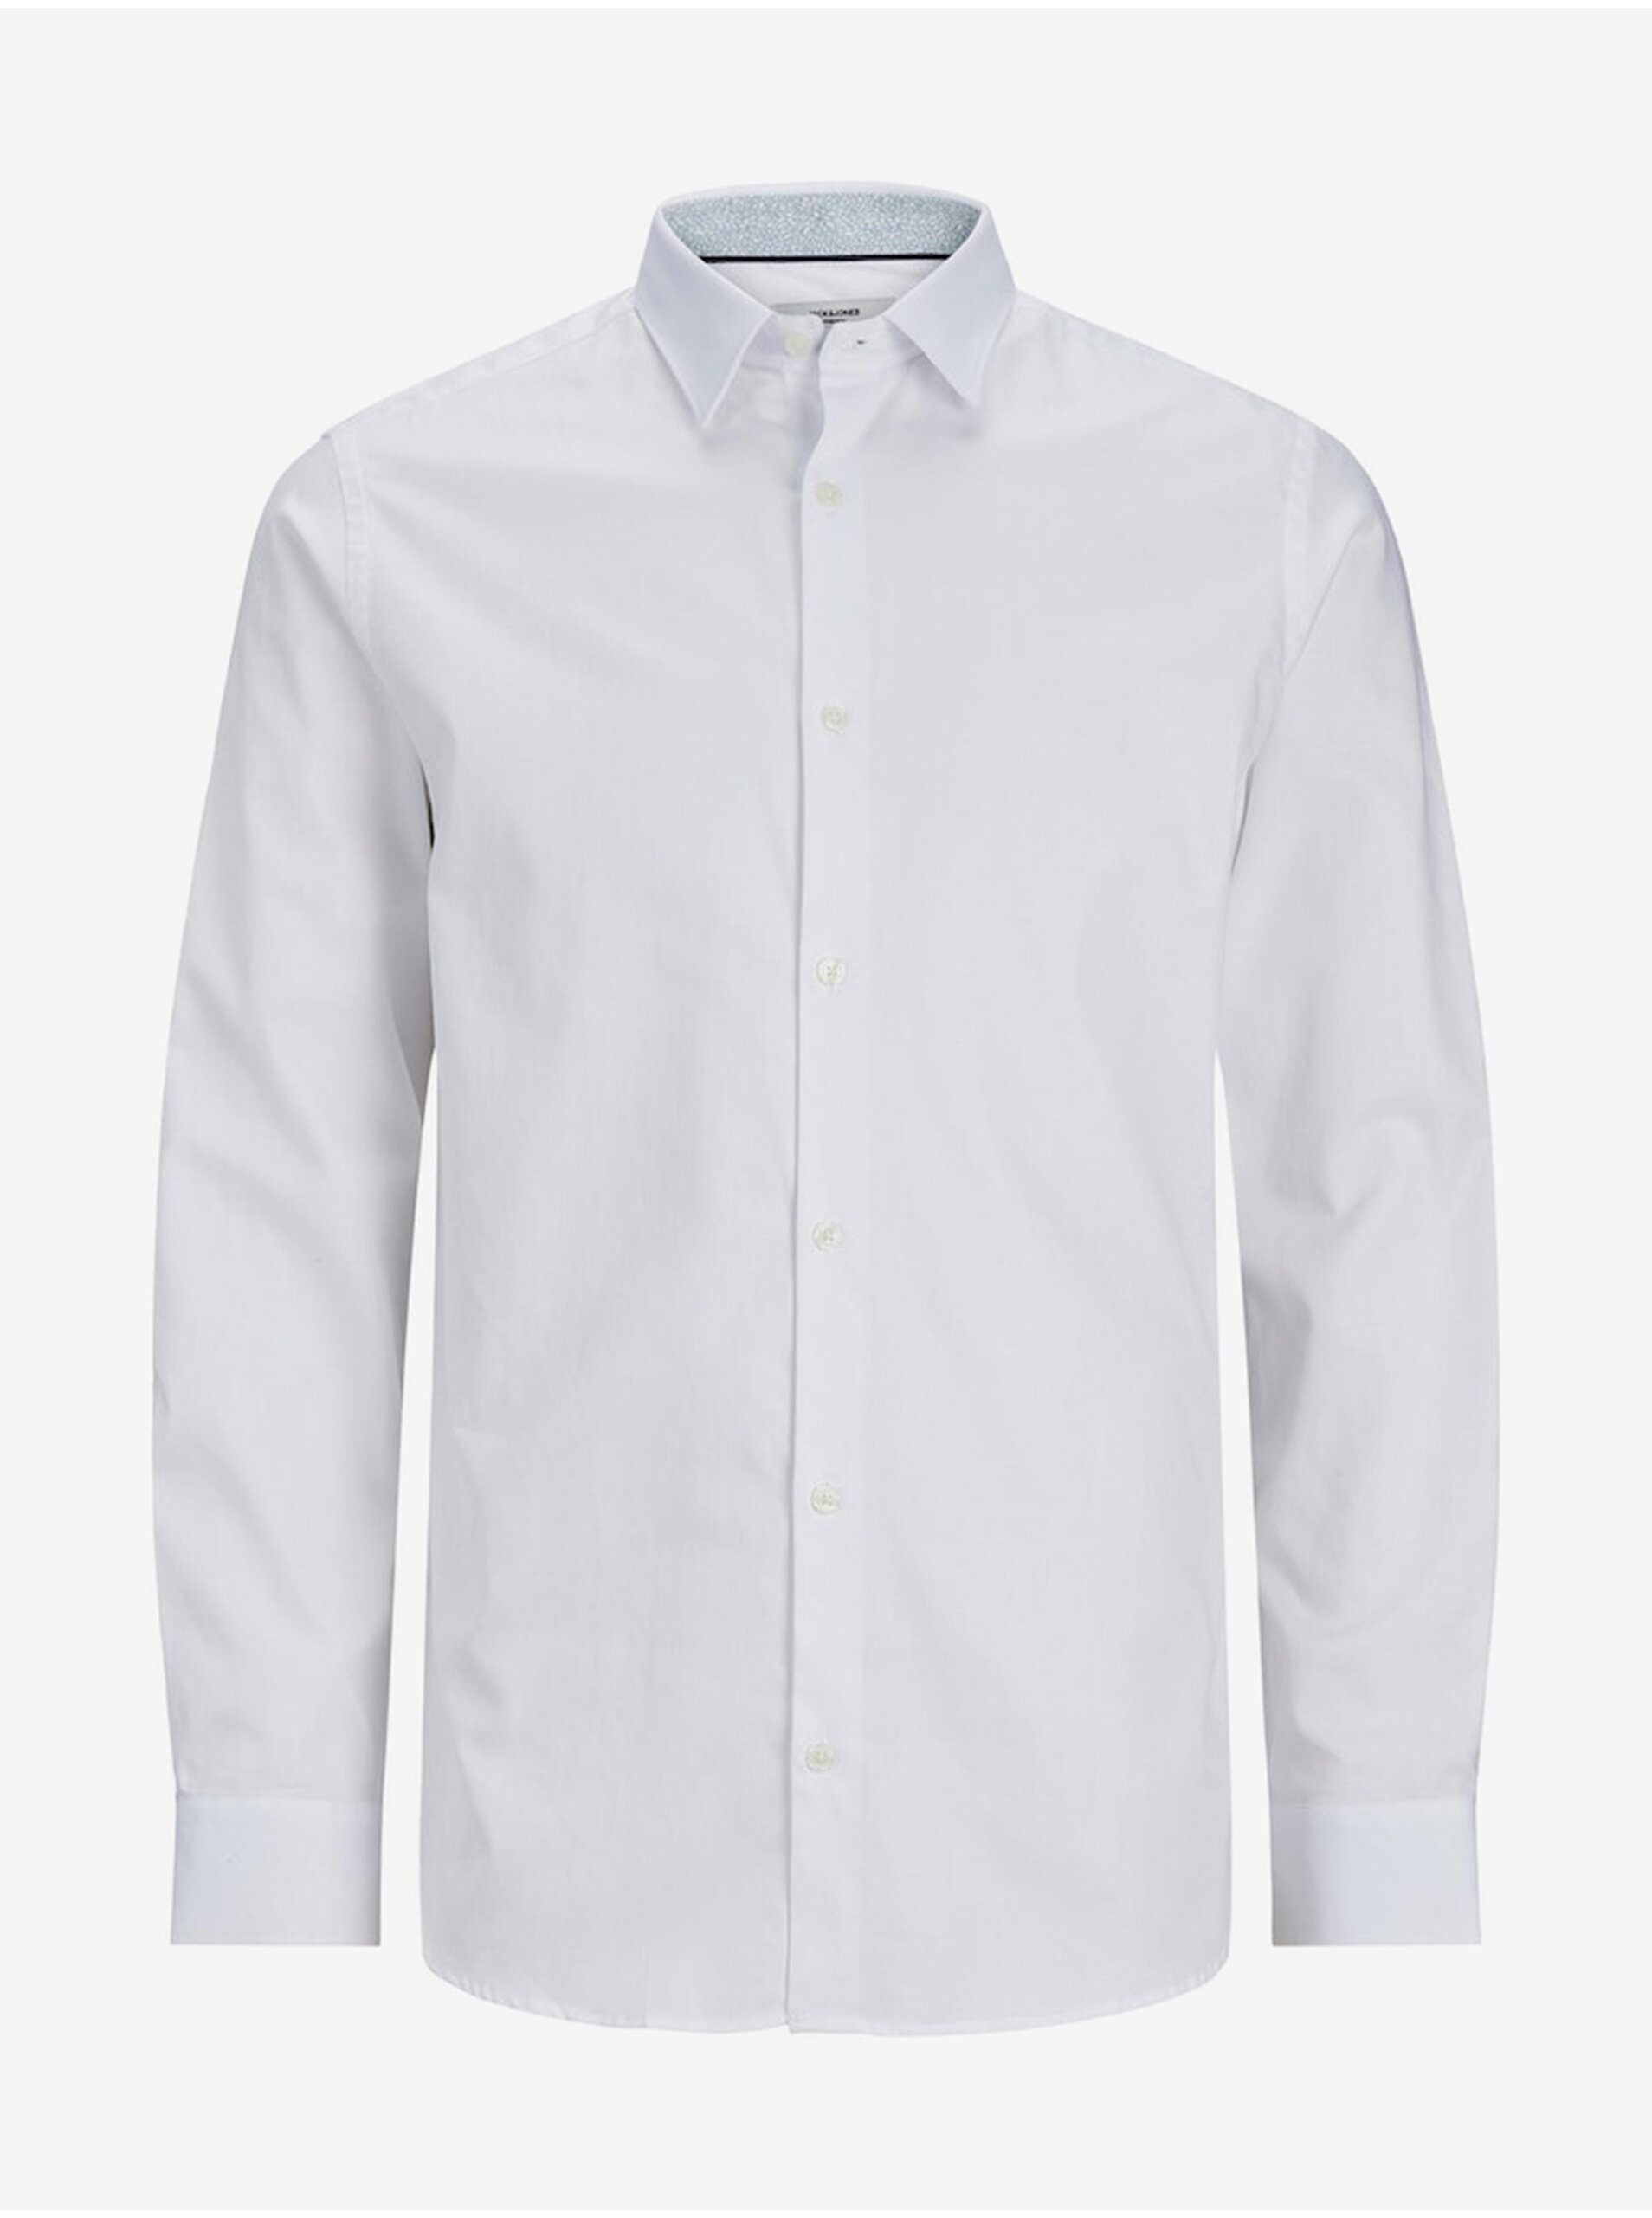 Men's White Shirt Jack & Jones Nordic - Men